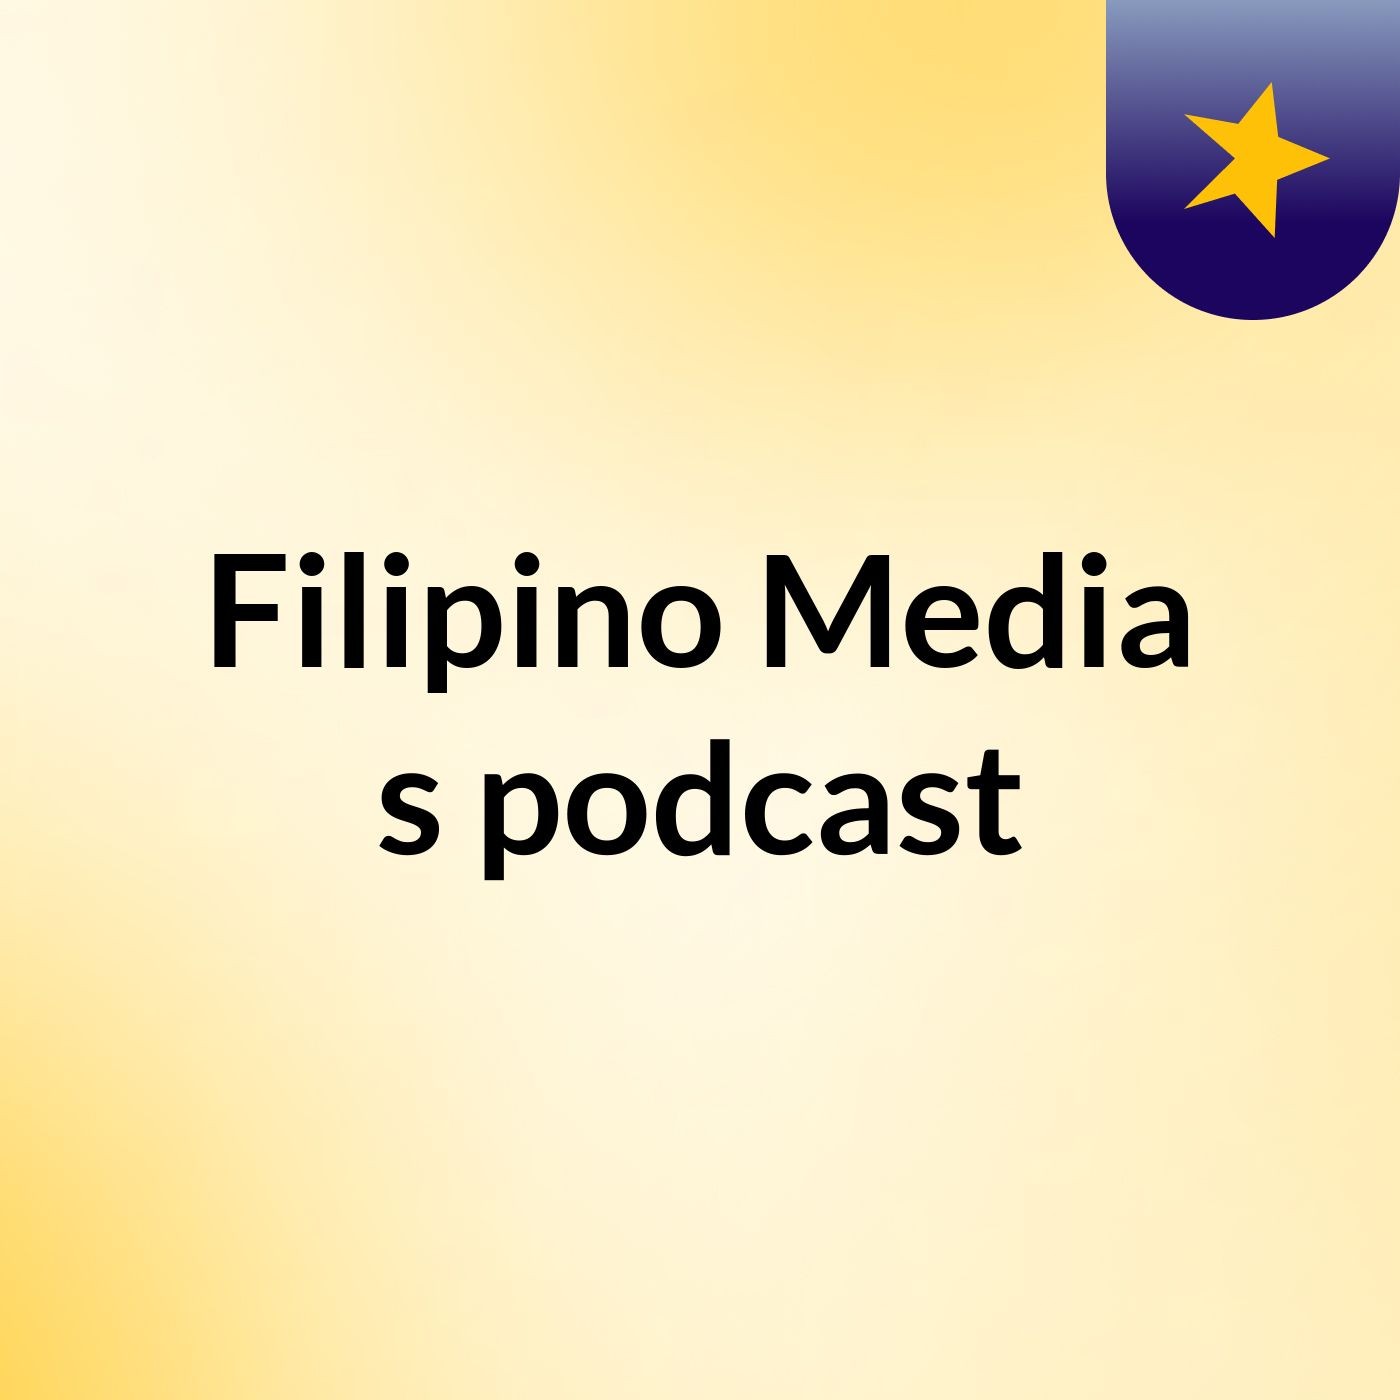 Episode 4 - Filipino Media's podcast